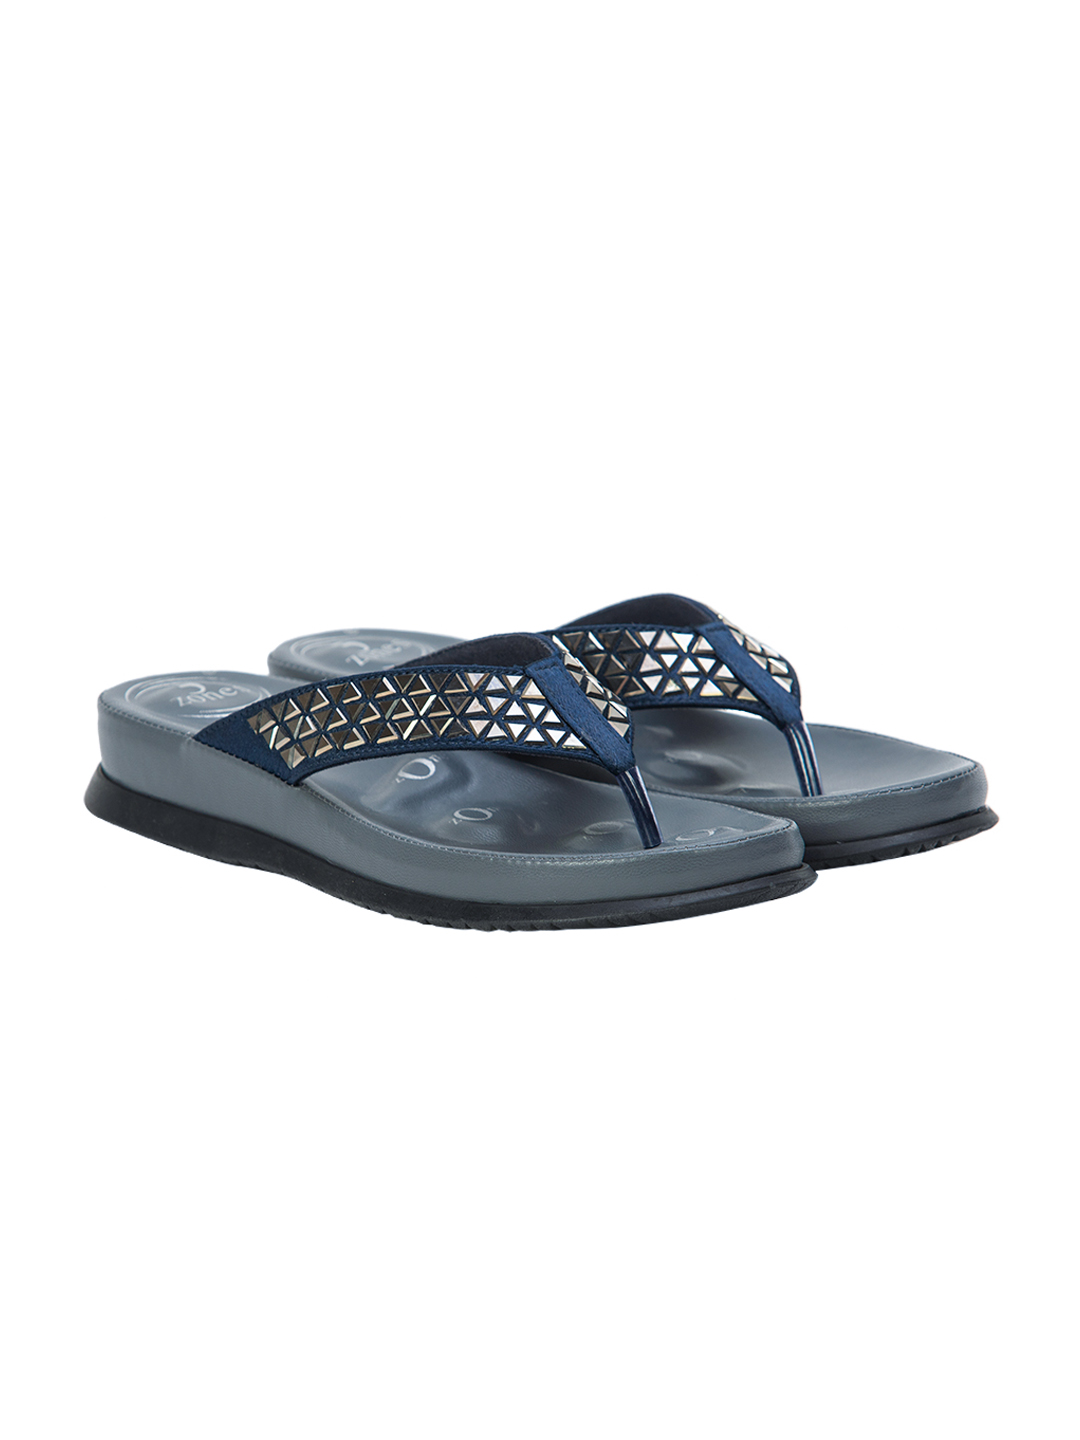 Buy Von Wellx Germany Comfort Beam Blue Slippers Online in Gujarat